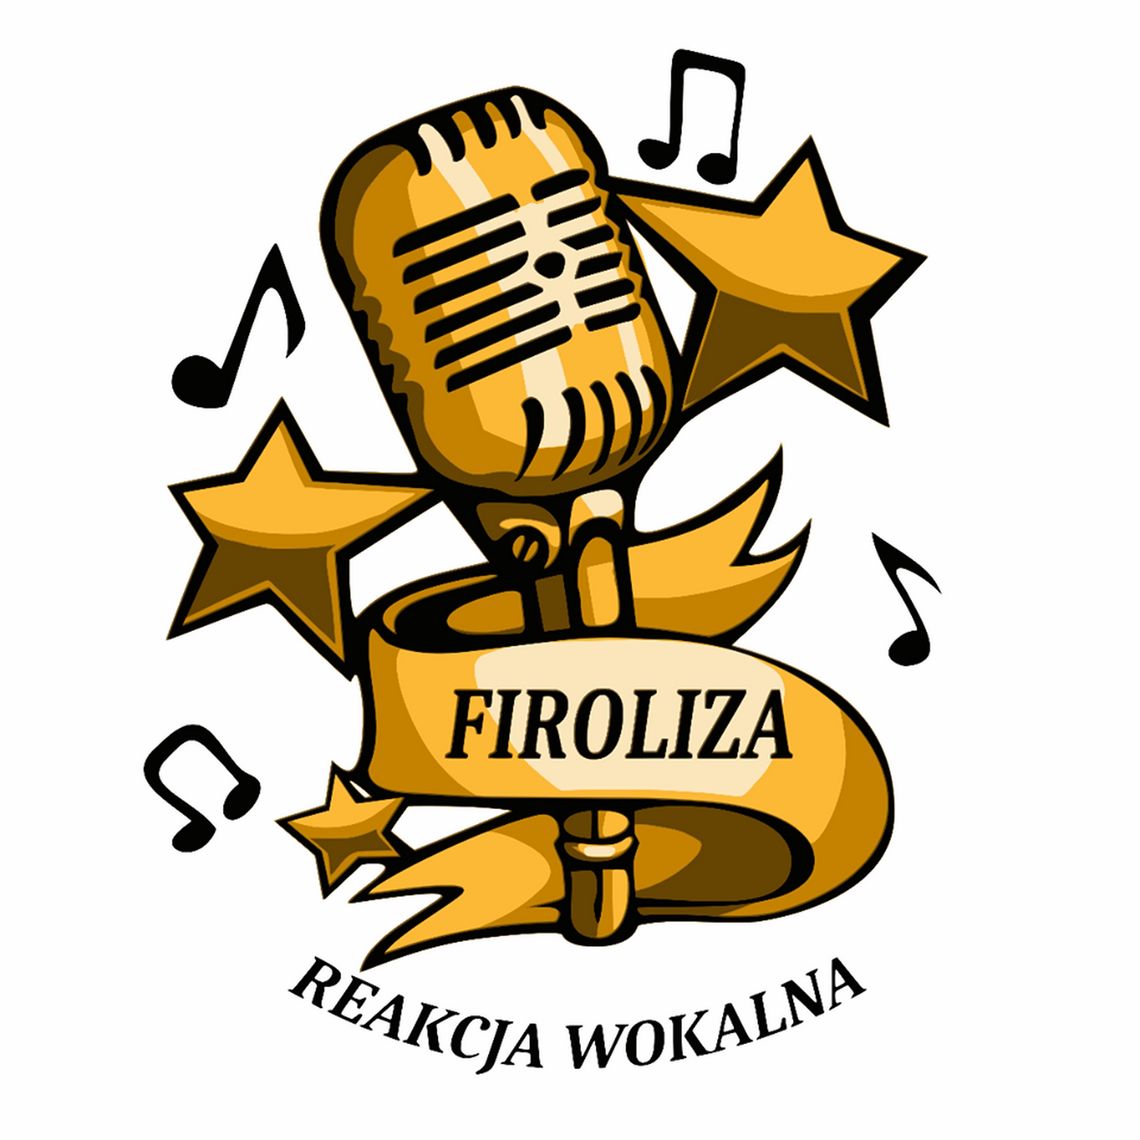 FIROLIZA - wokalistki Fabryki Piosenki w Finale [FOTO]